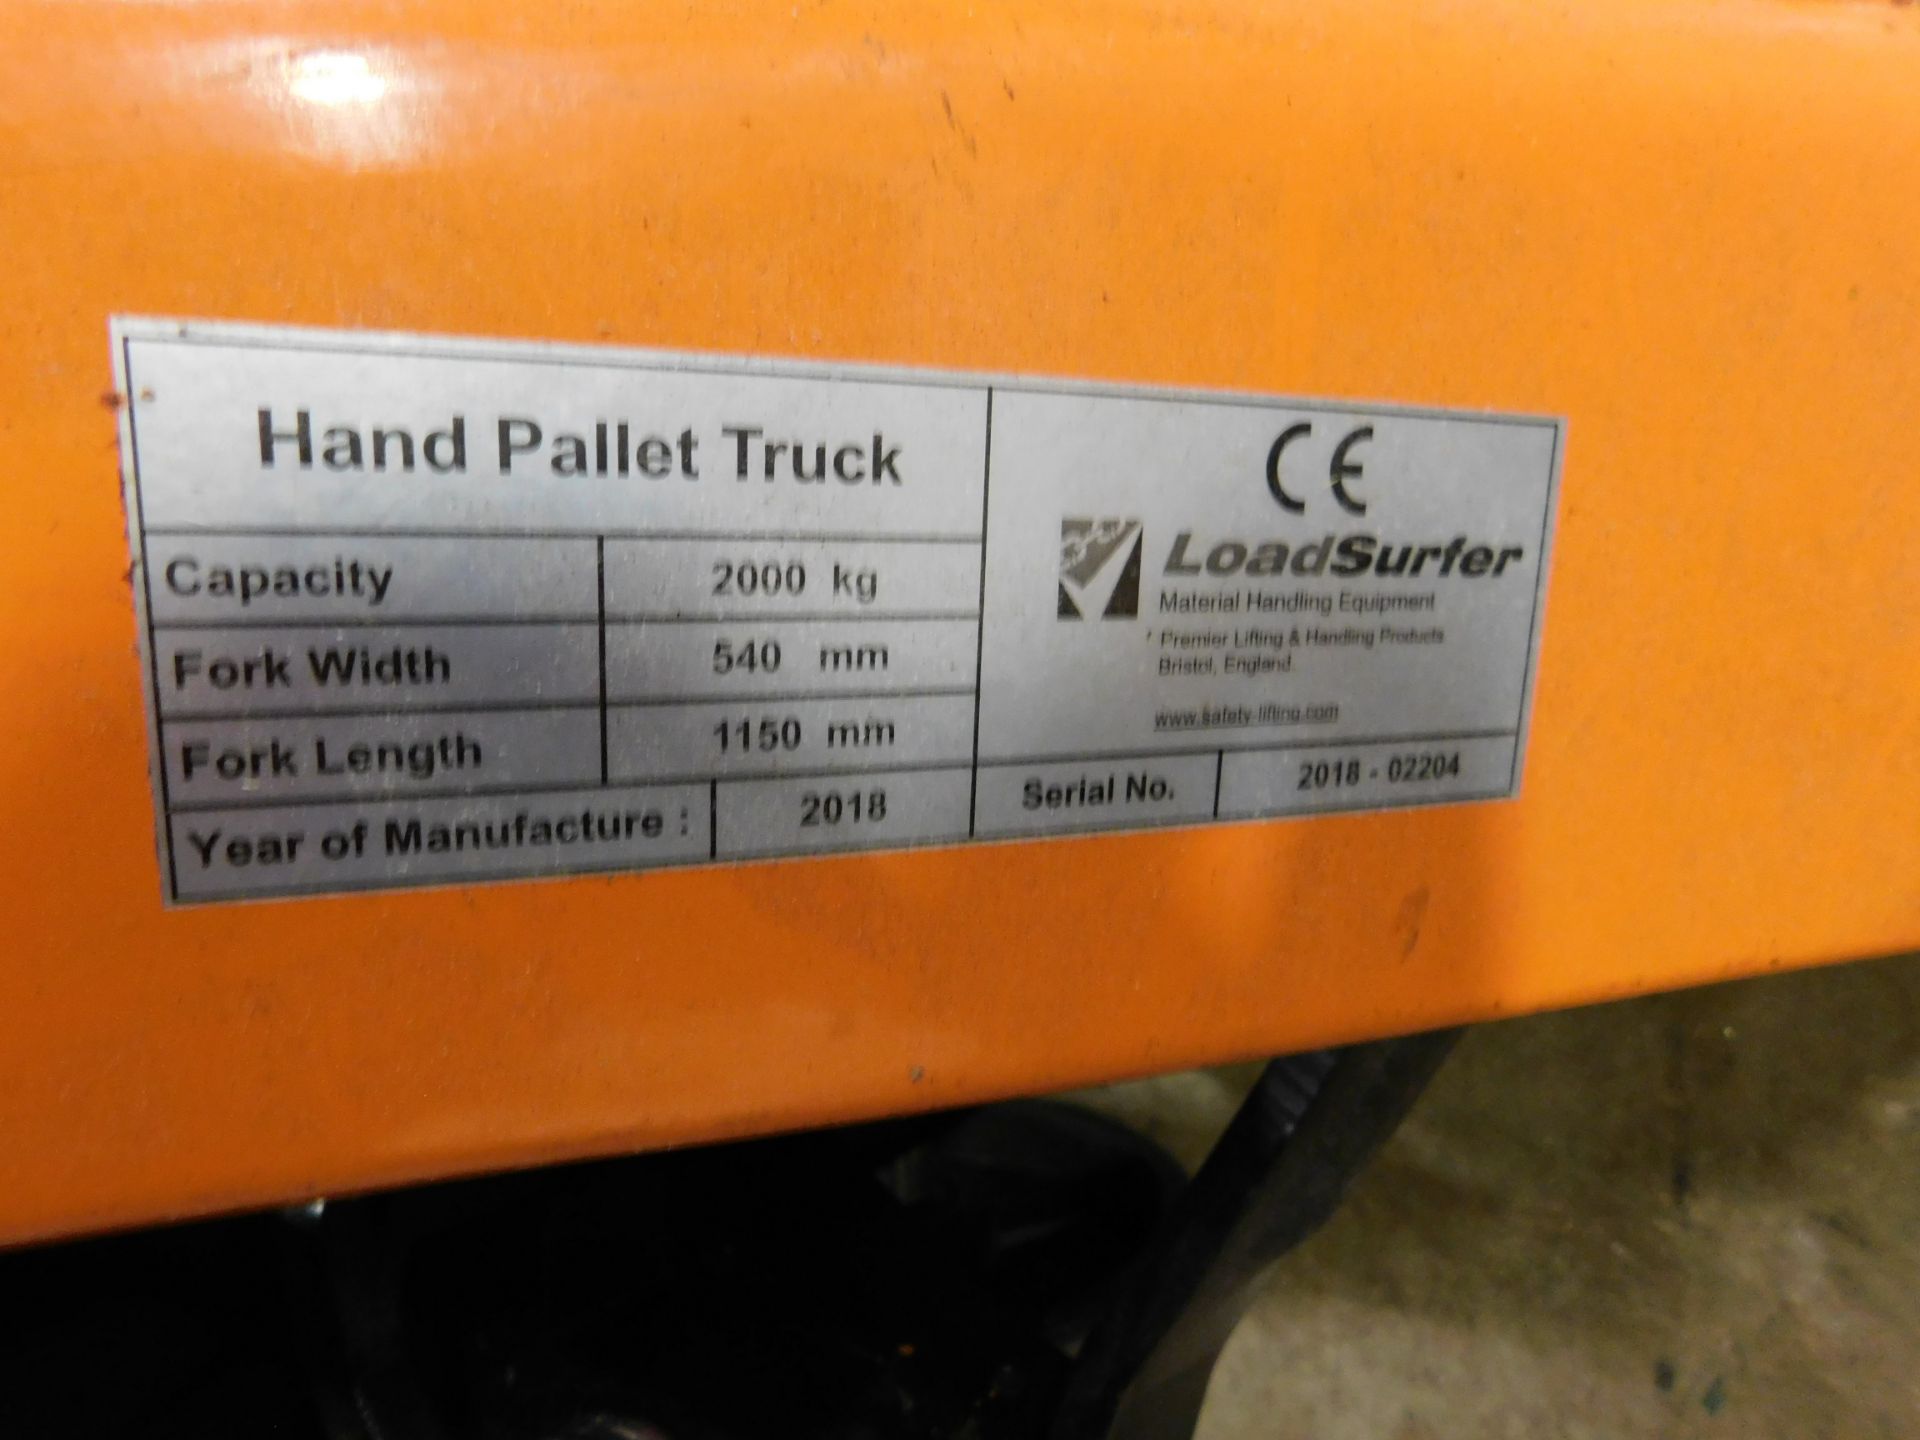 Loadsurfer 2000kg hand hydraulic pallet truck - Image 2 of 2